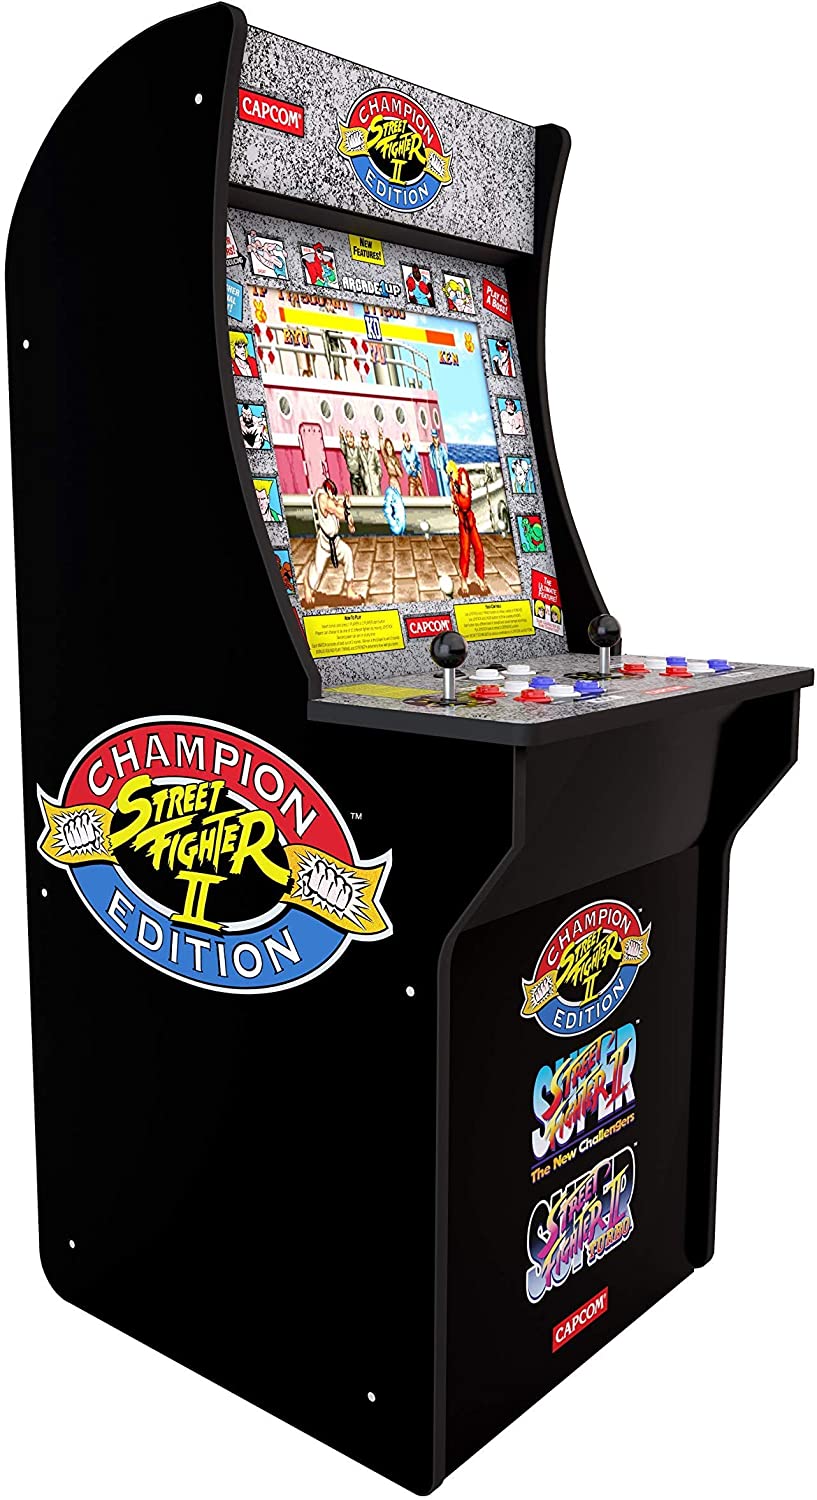 promo - Promo sur la borne arcade Street Fighter chez Amazon ! 81tdnu10